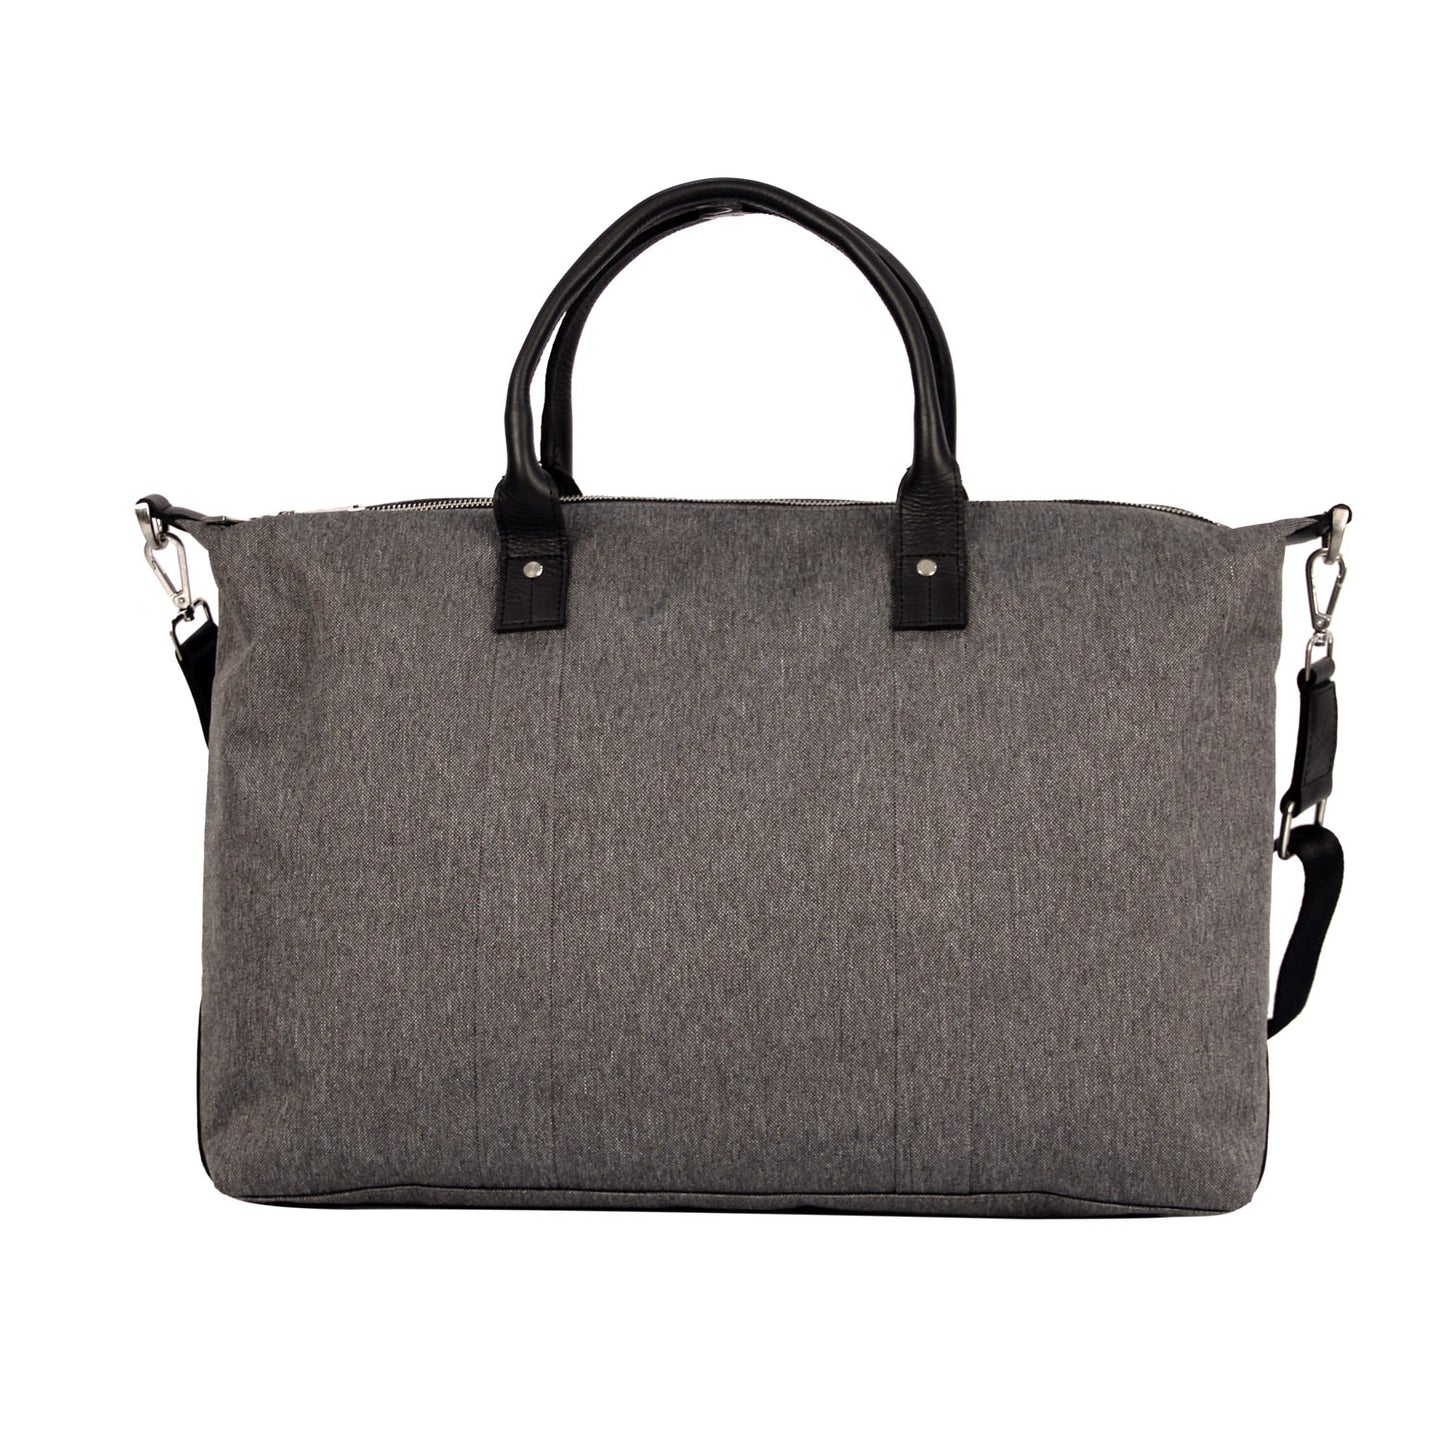 Grey-Black Travel Bag